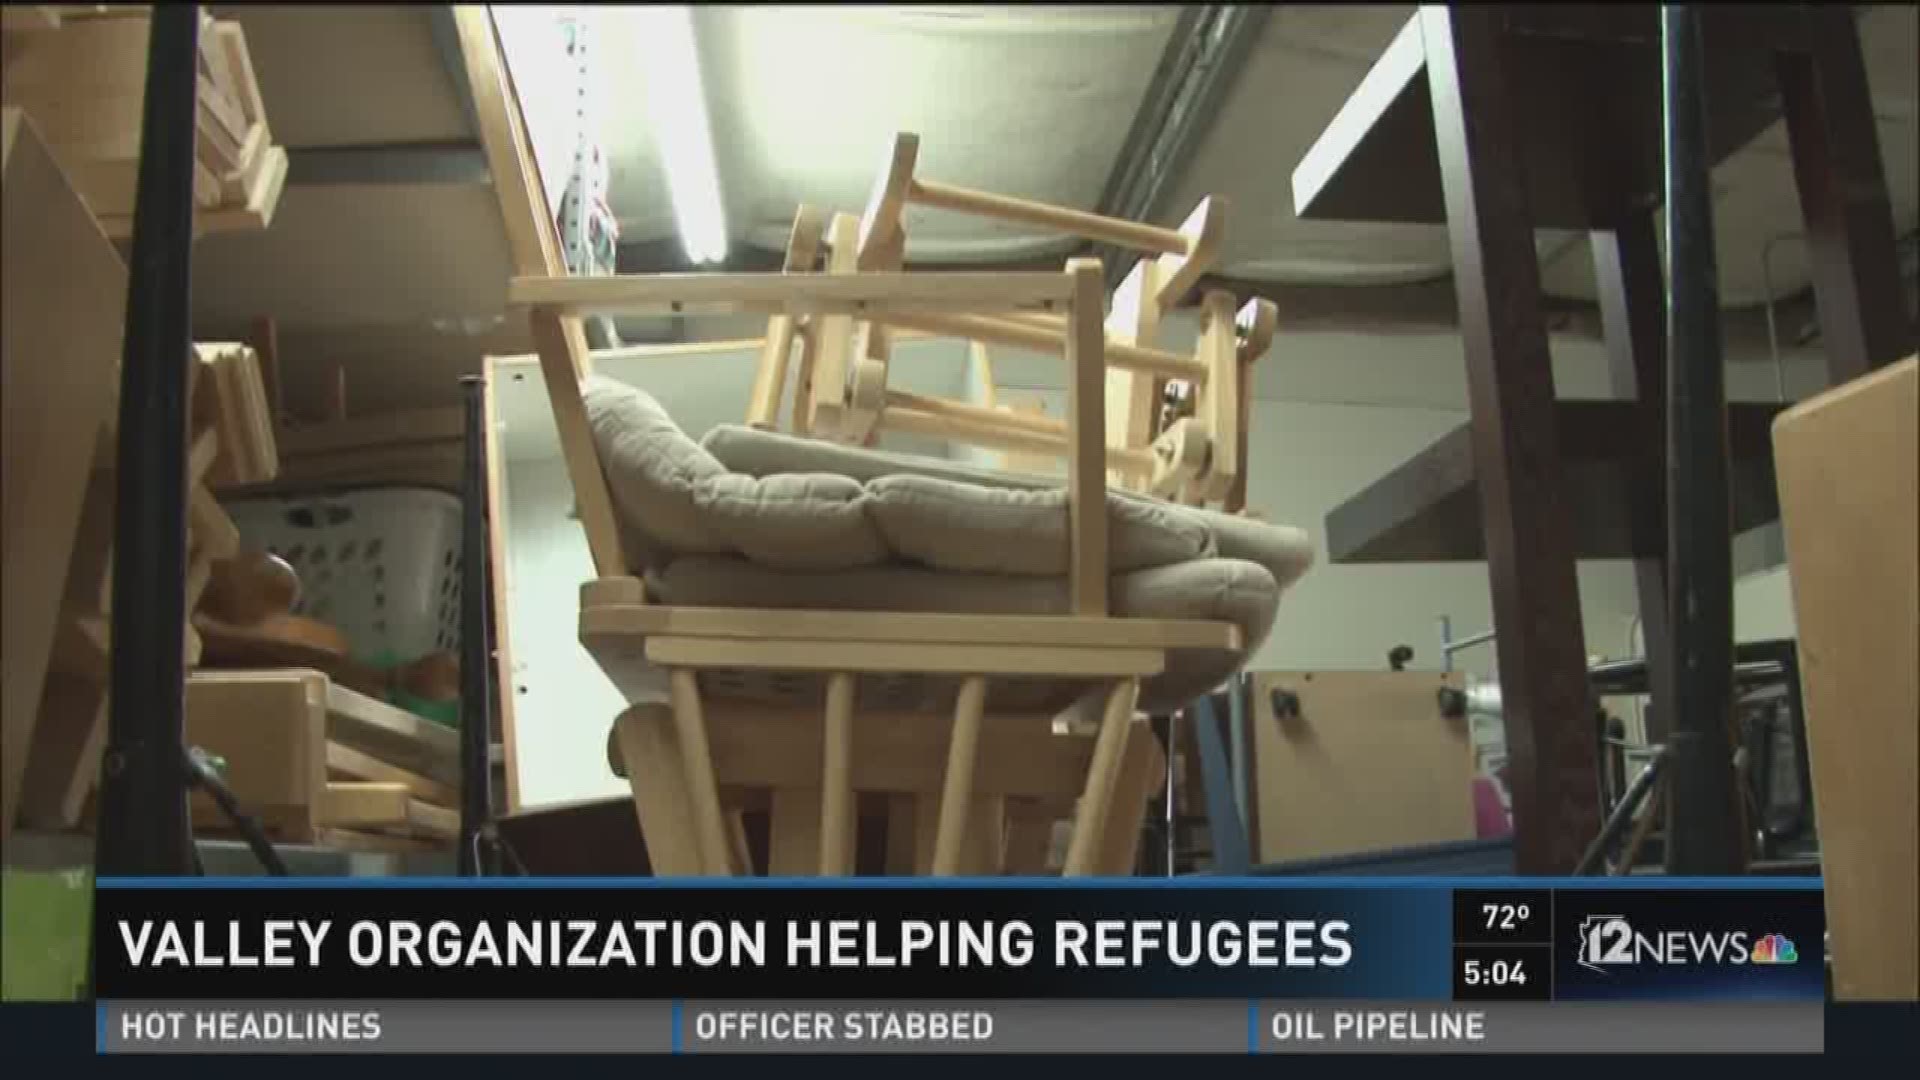 Phoenix area organization continues to help refugees despite travel ban.